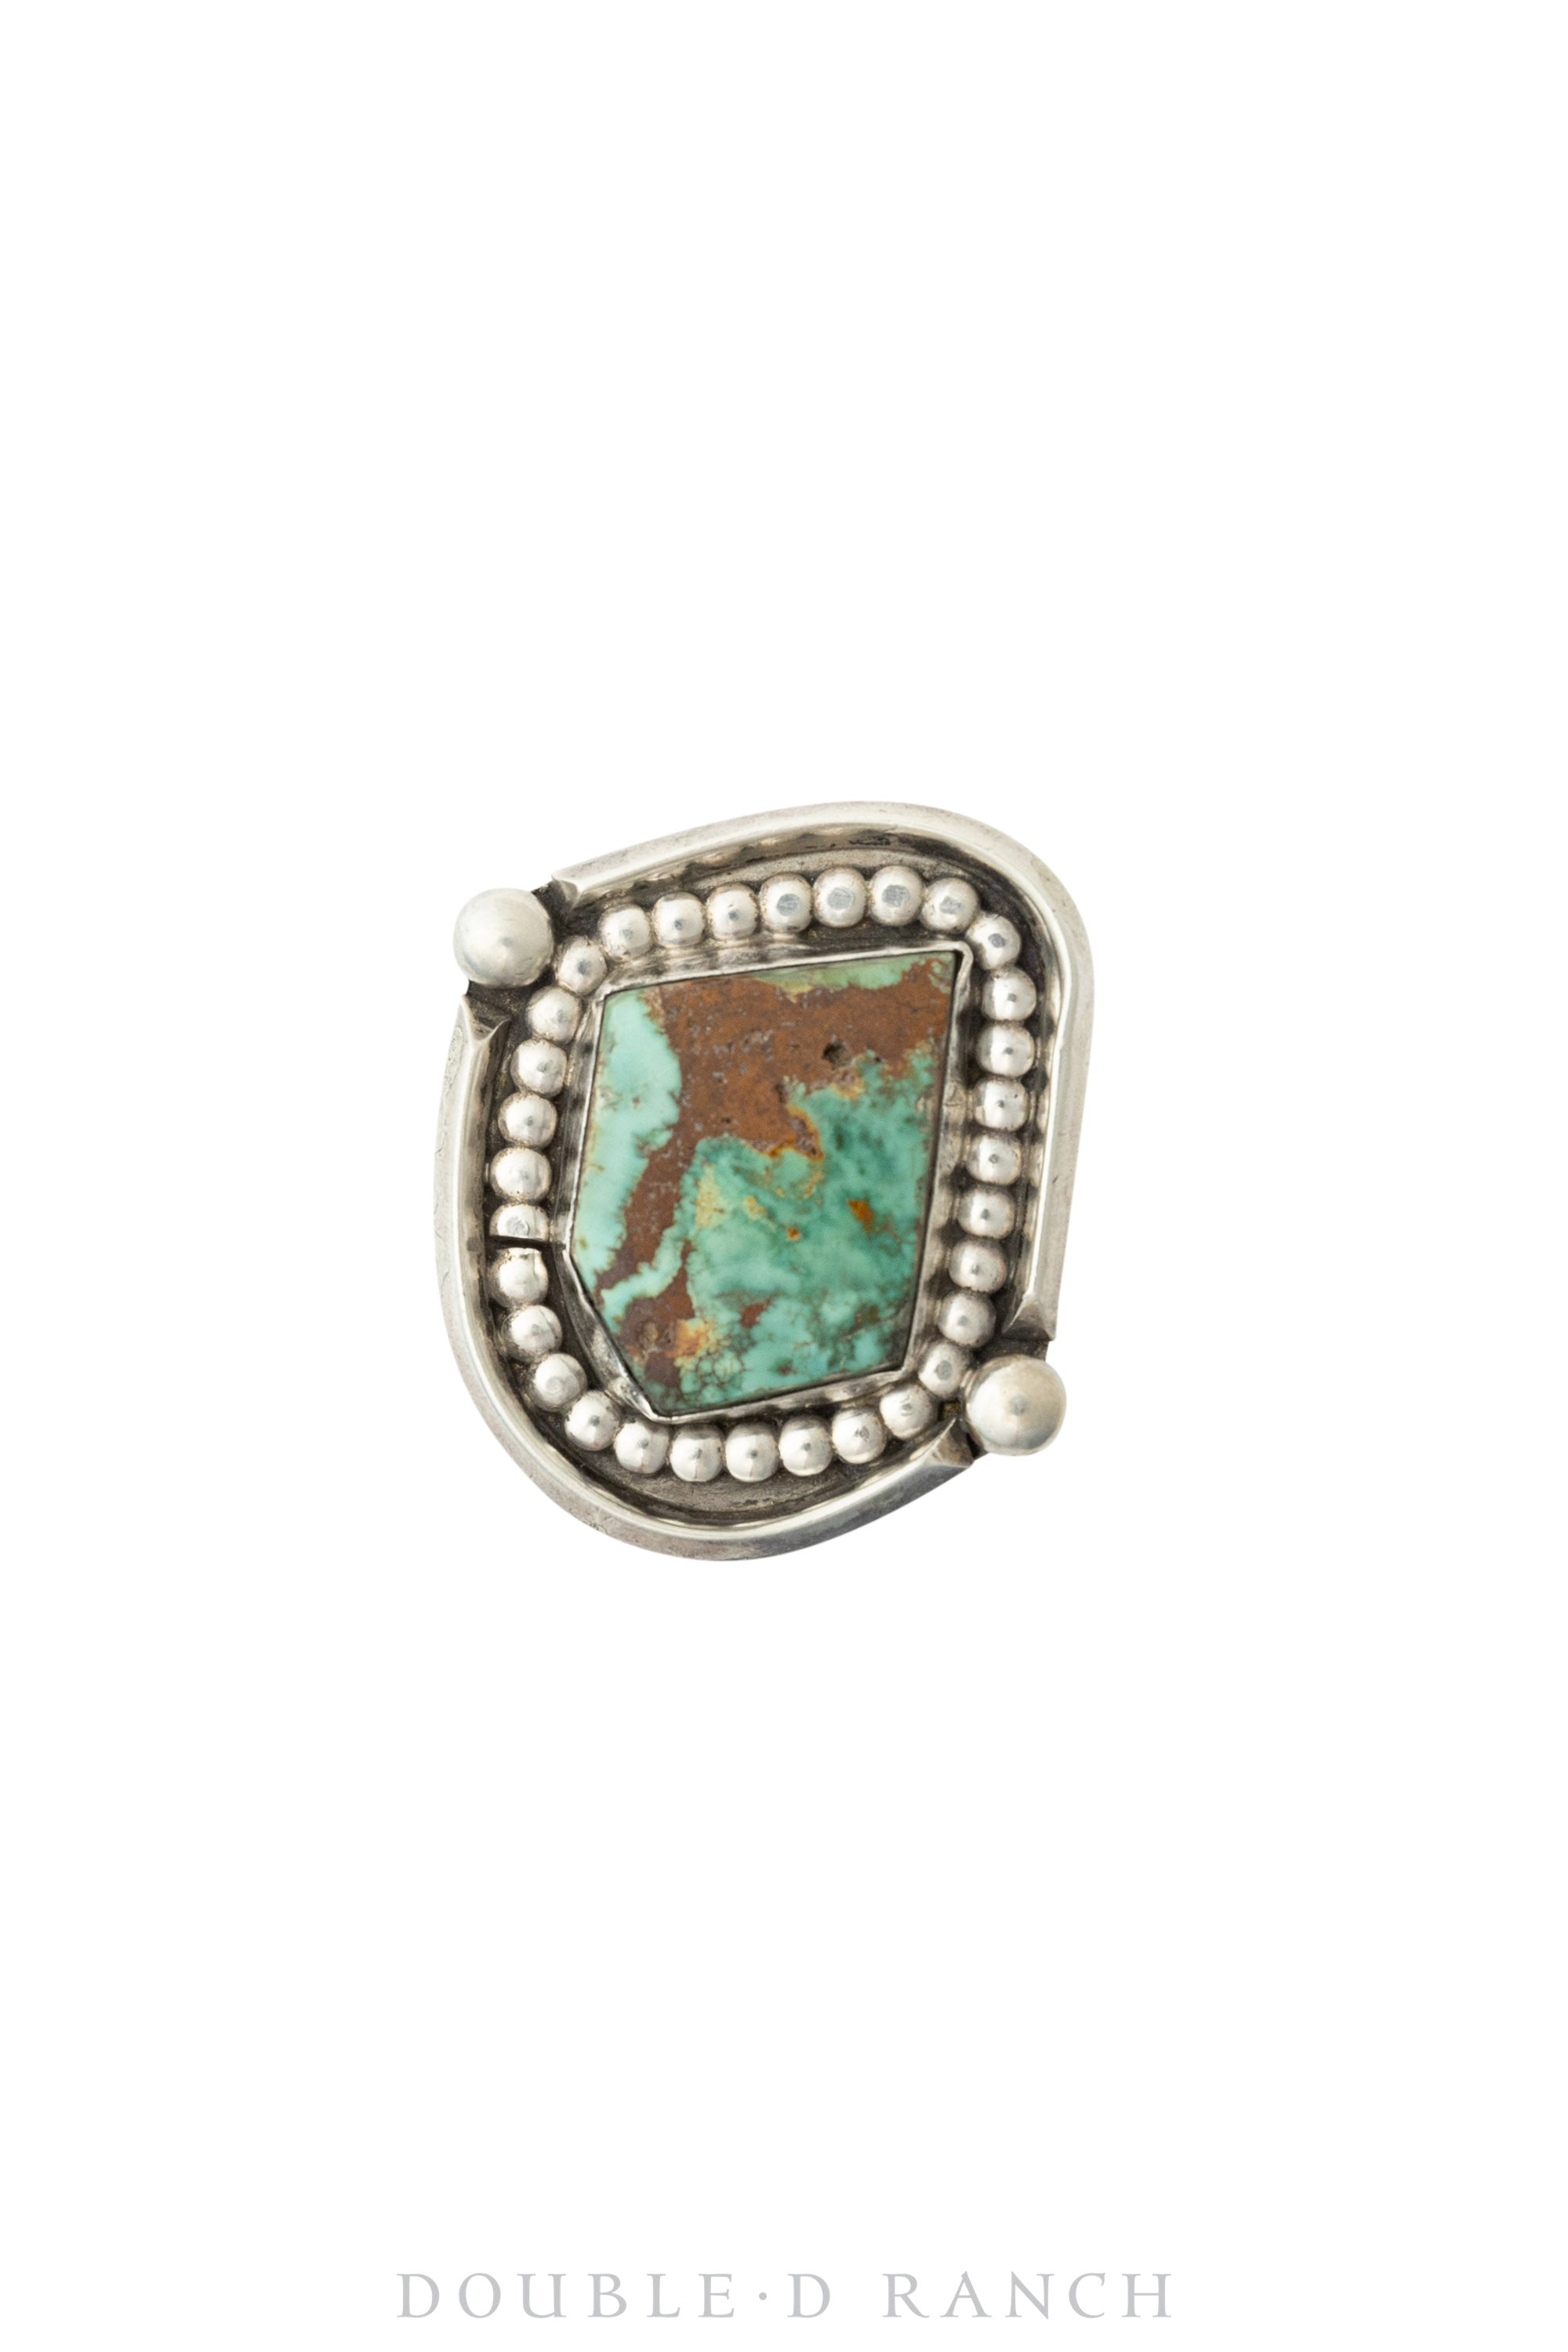 Ring, Turquoise, Single Stone, Sterling Drop Bezel, Vintage, 1009